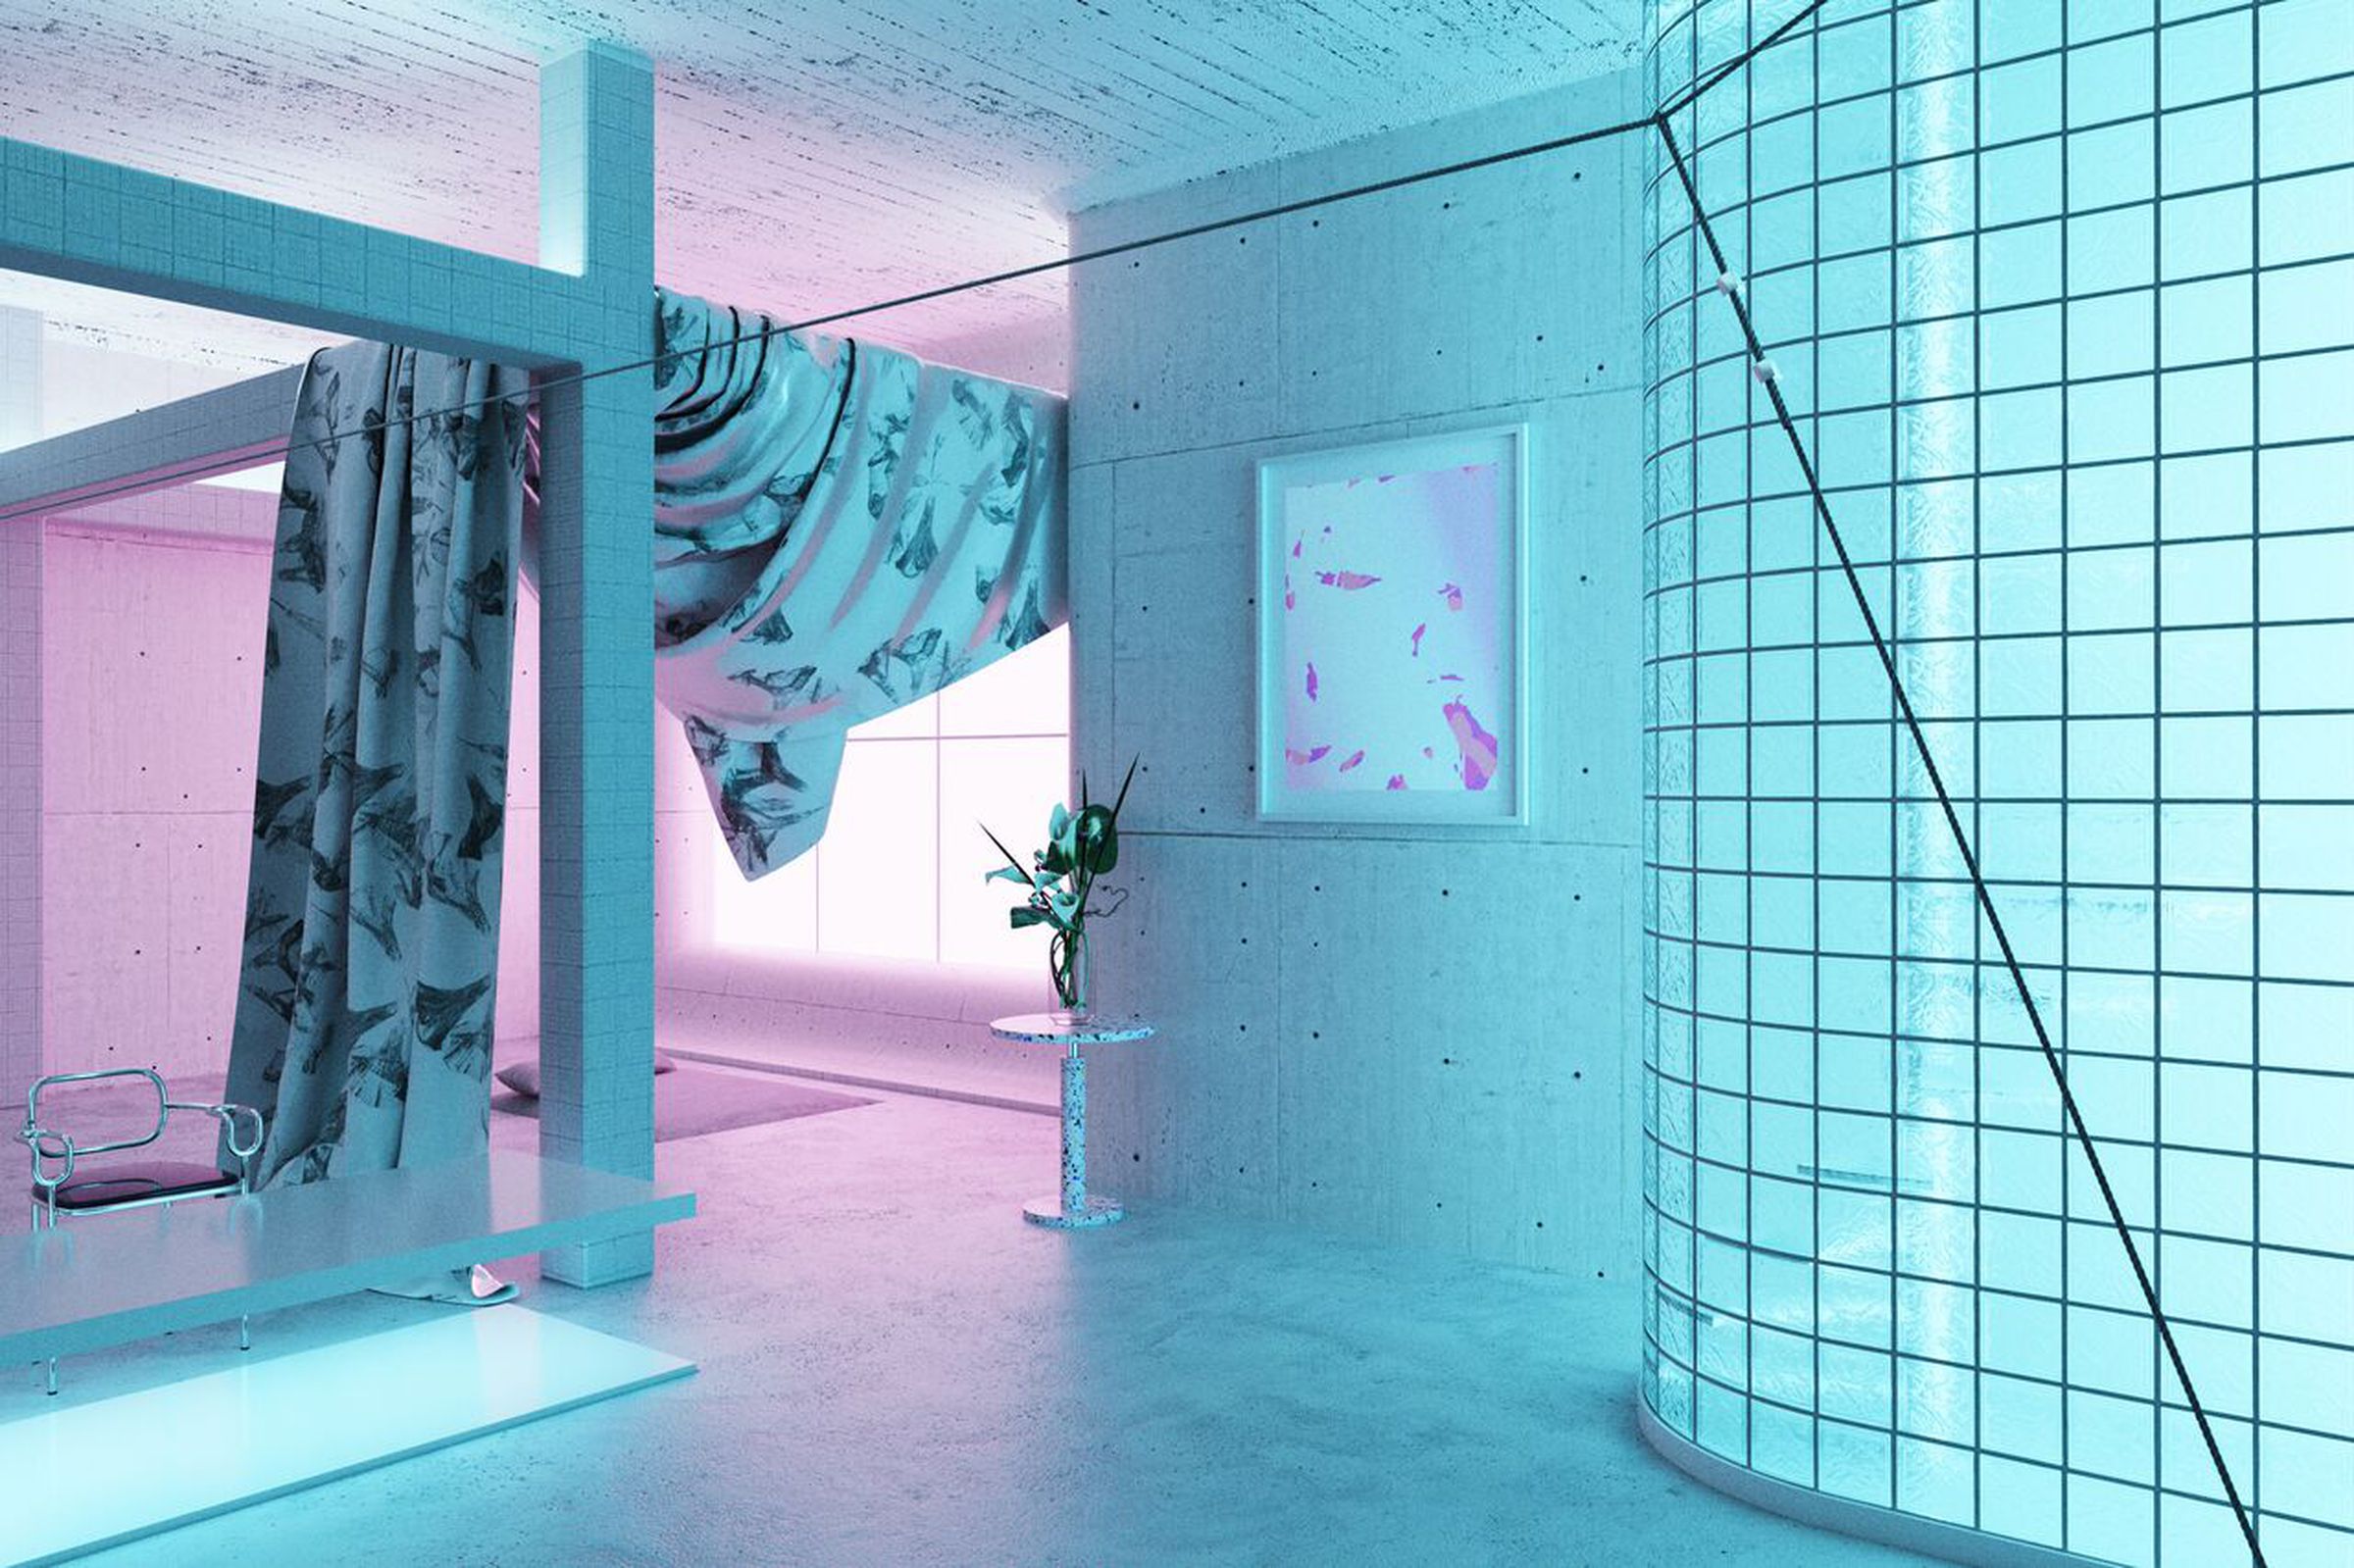 Interior design trend #4- 80’s Japan, featuring artwork by Yorgos Stamkopoulos